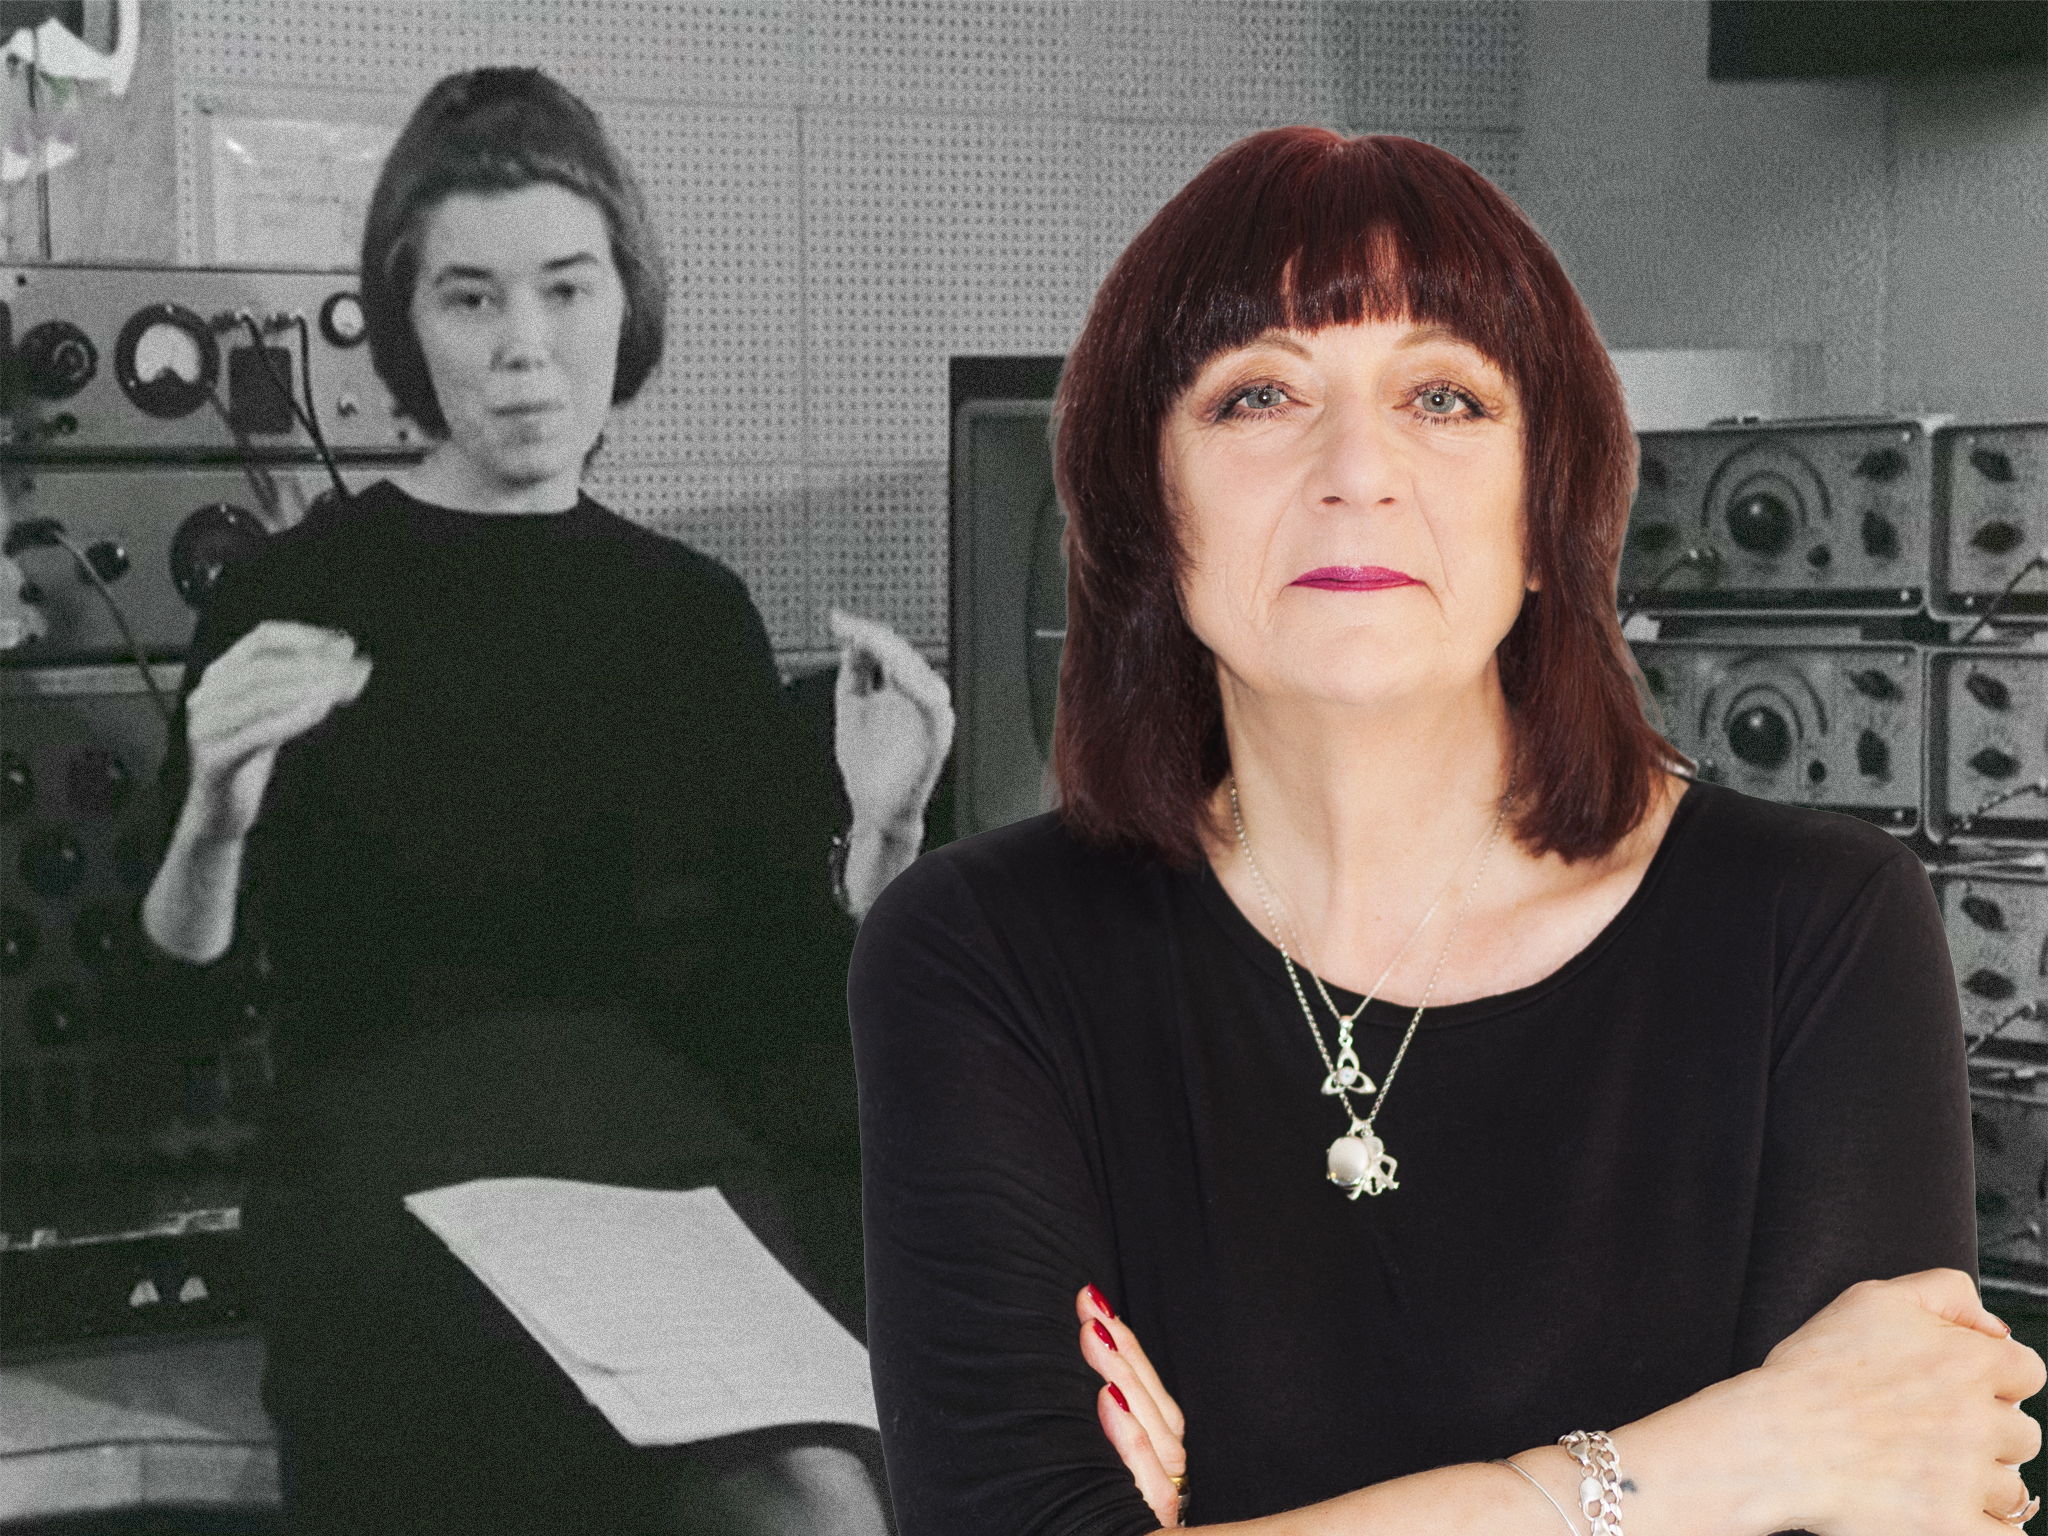 Uncompromising visionaries: Delia Derbyshire in 1965, and Cosey Fanni Tutti today